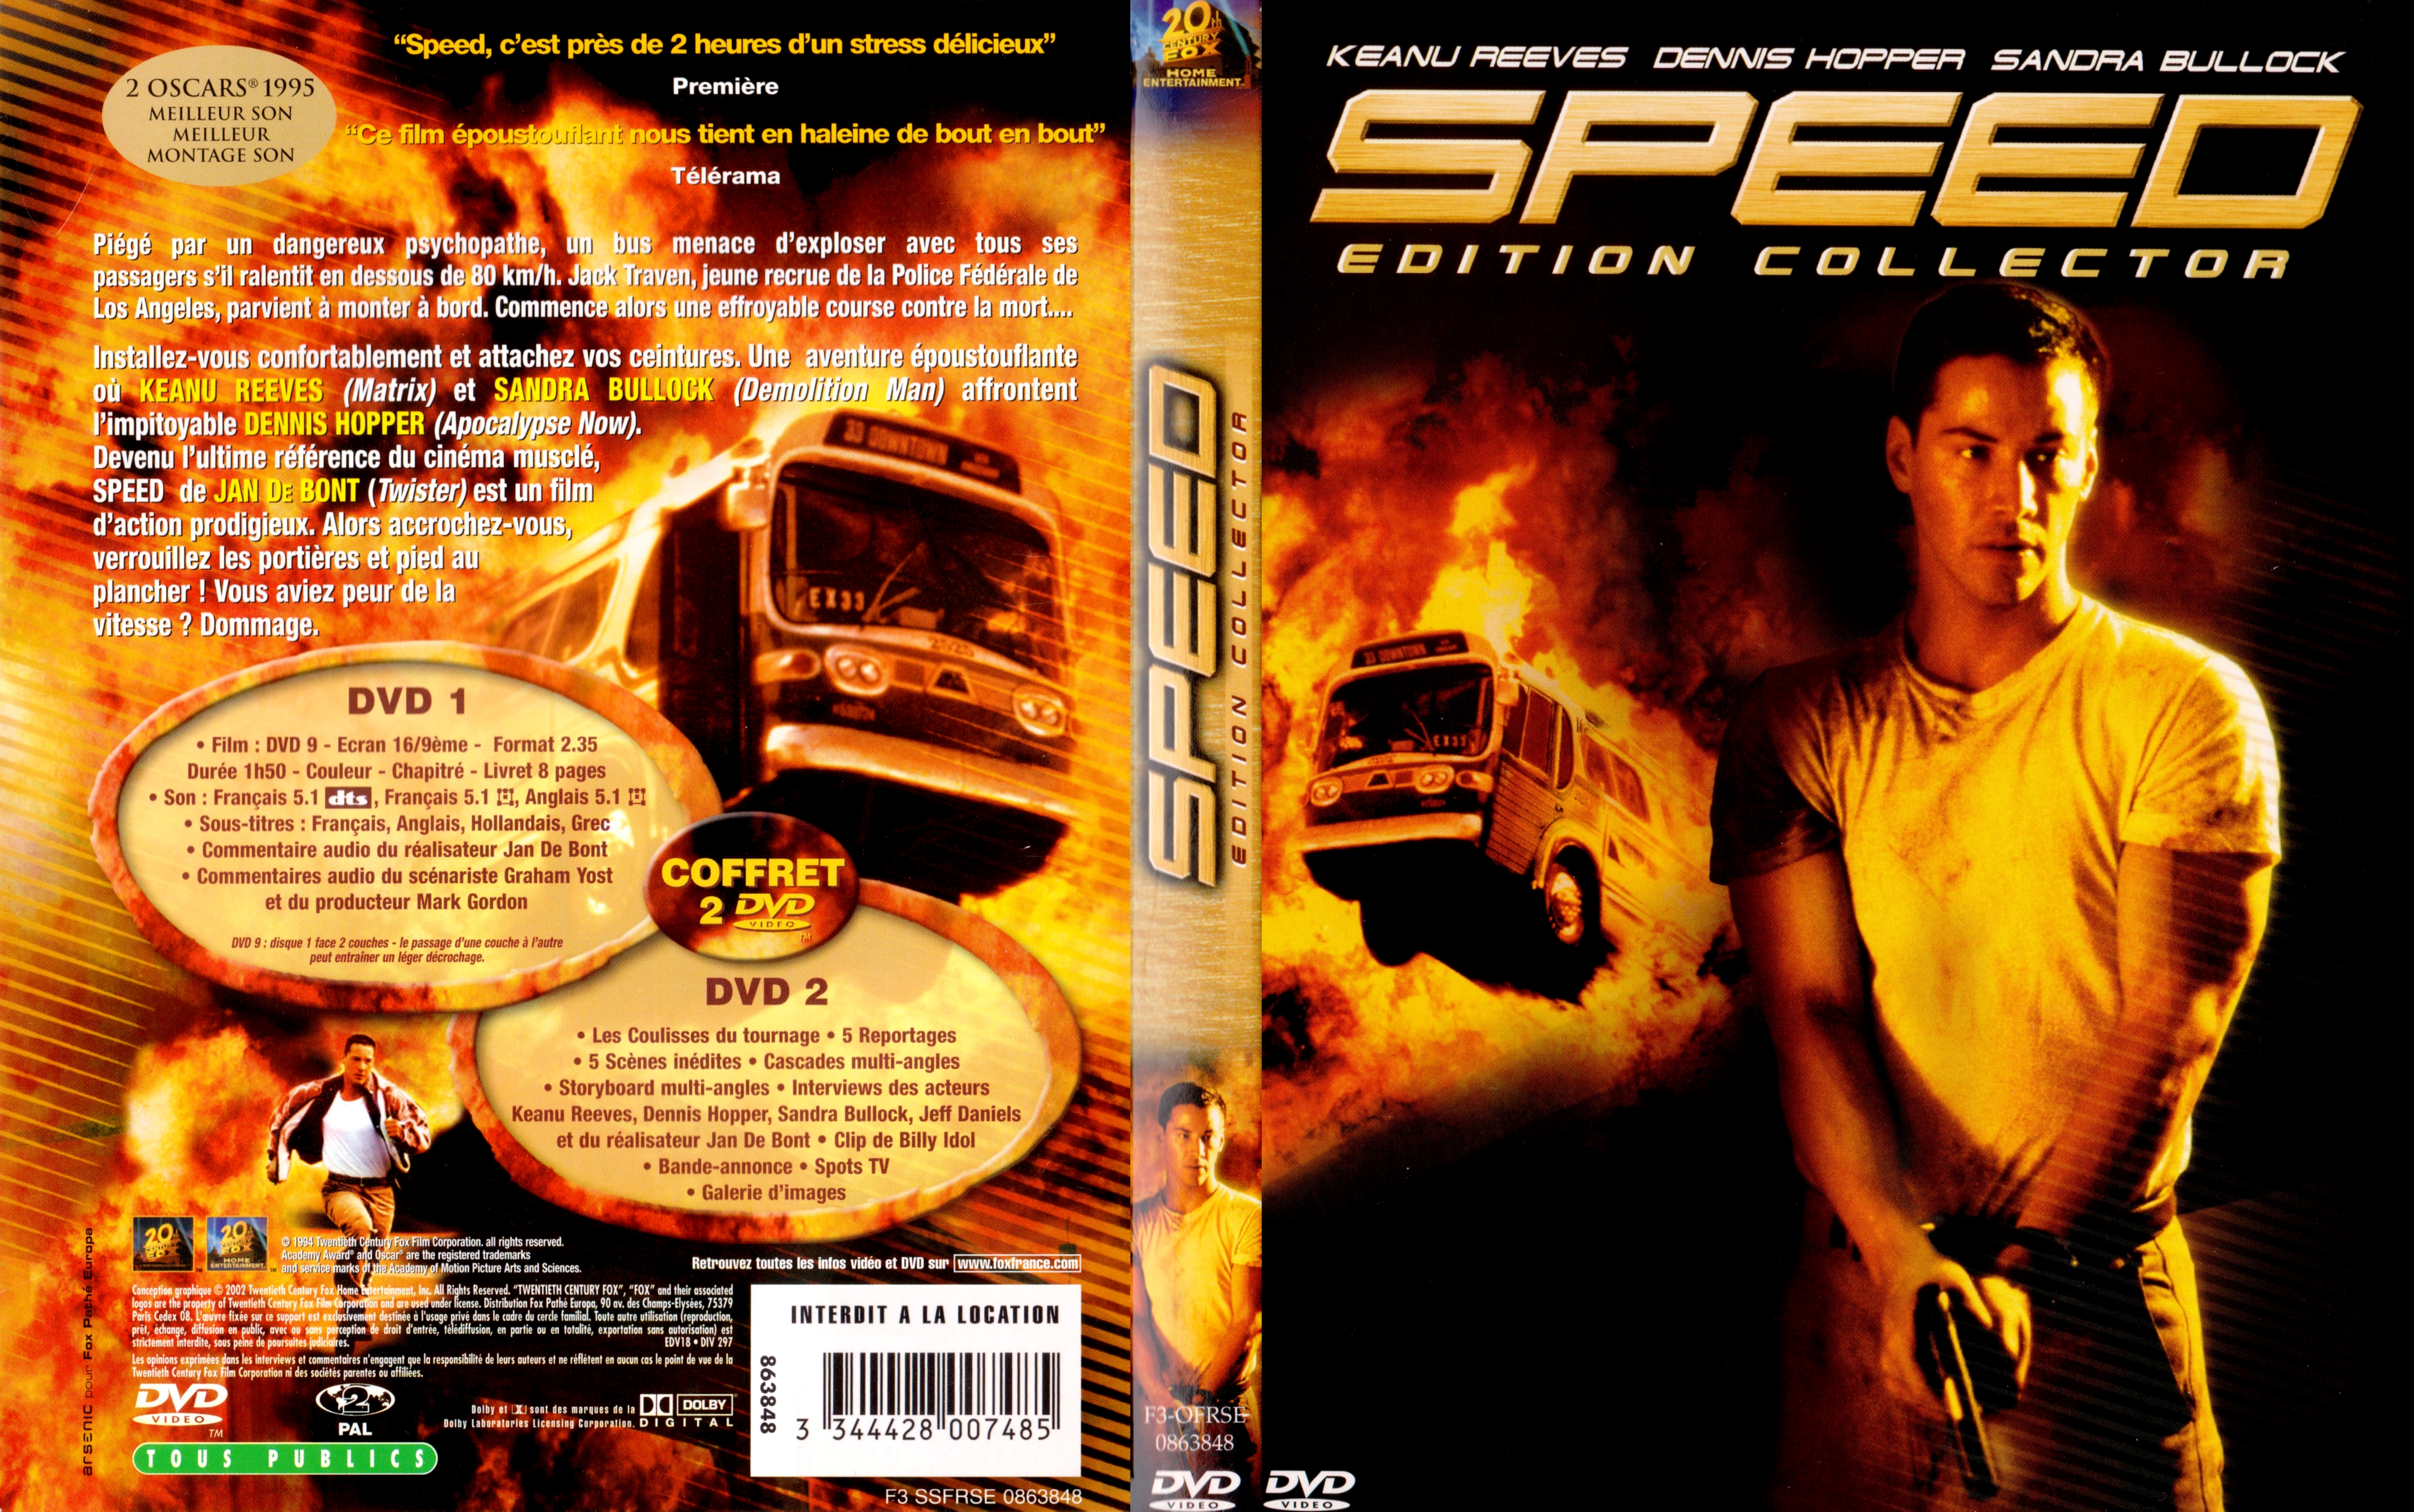 Jaquette DVD Speed v4